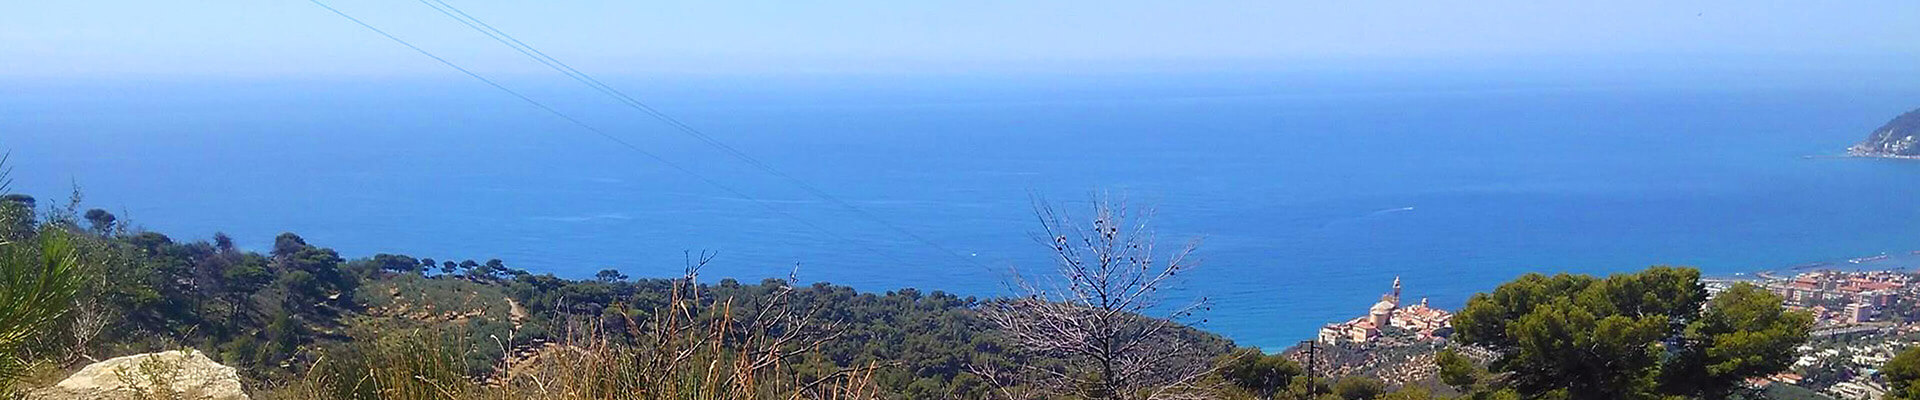 The breathtaking views of the Ligurian coast